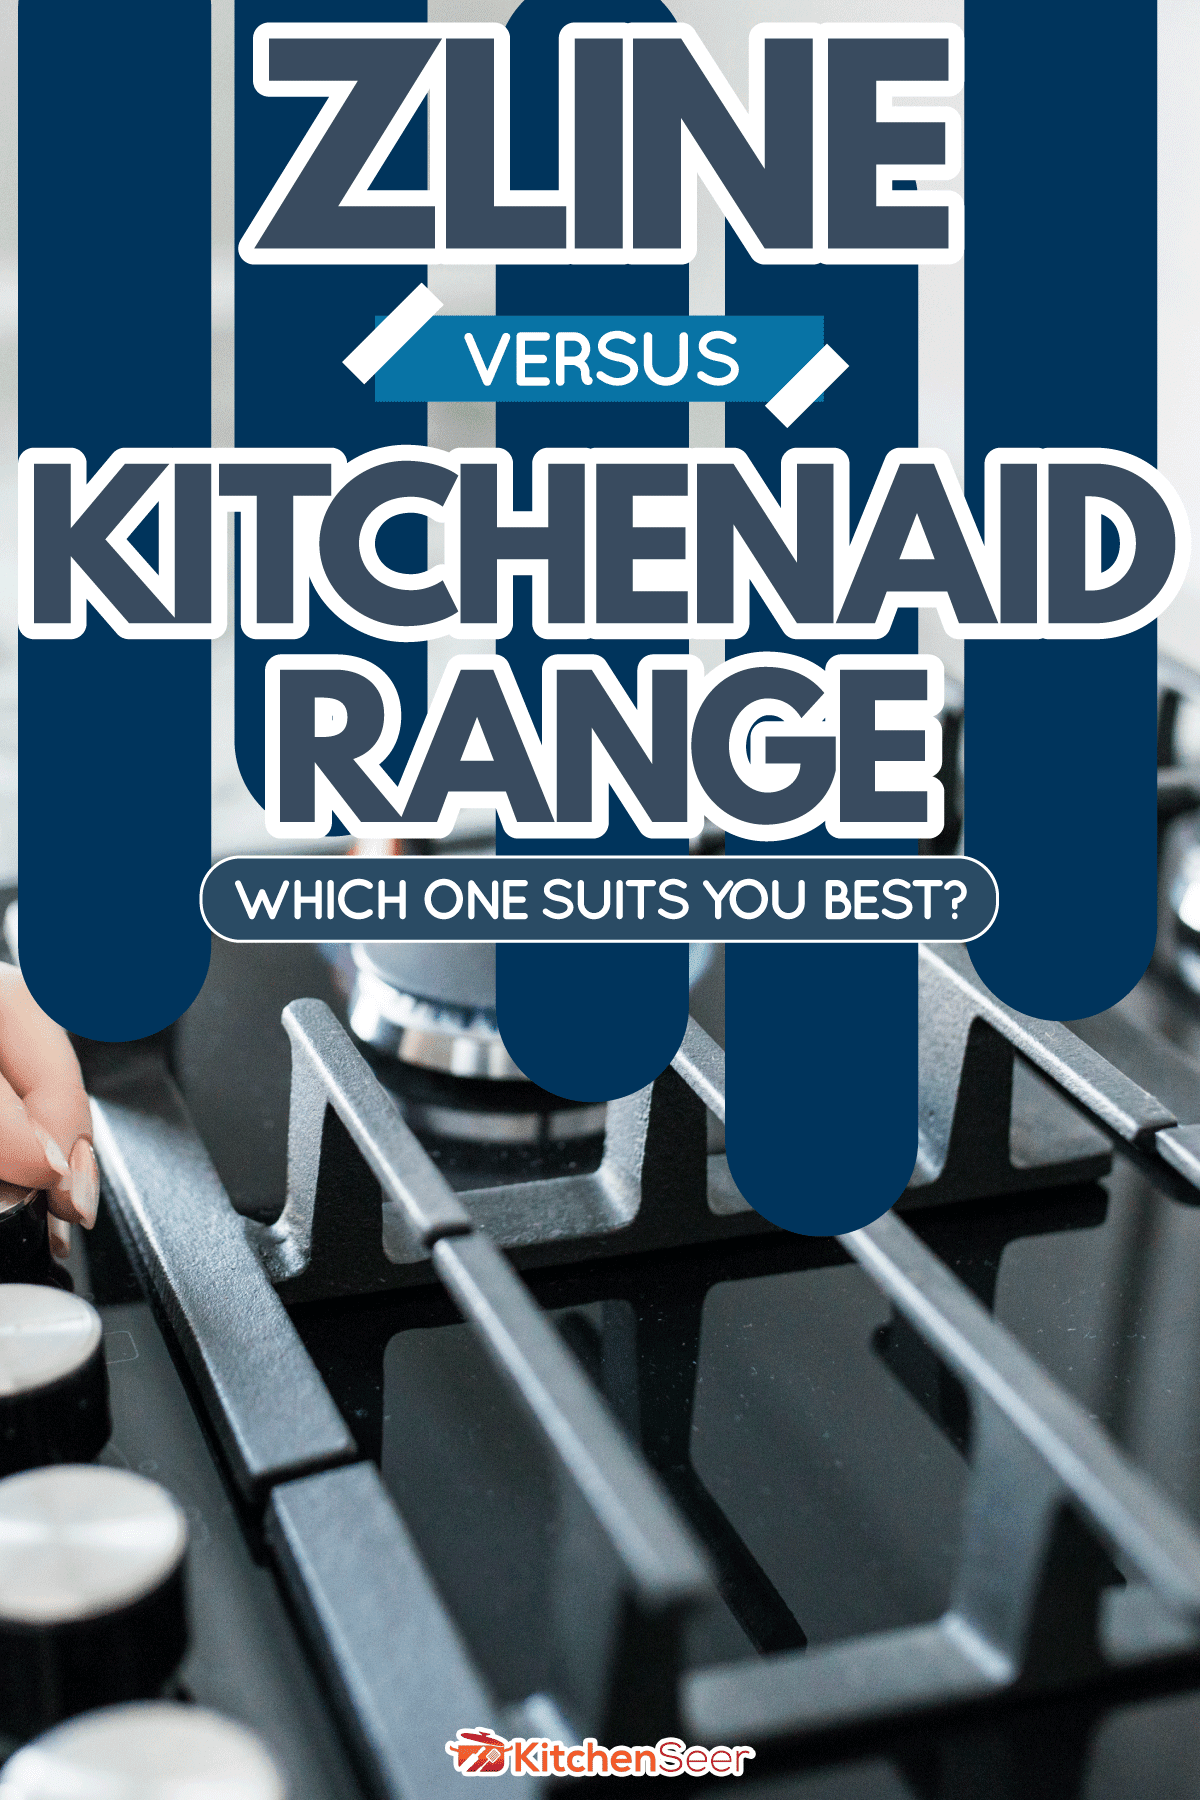 ZLINE-vs-KitchenAid-Range-Pros-Cons--Differences3